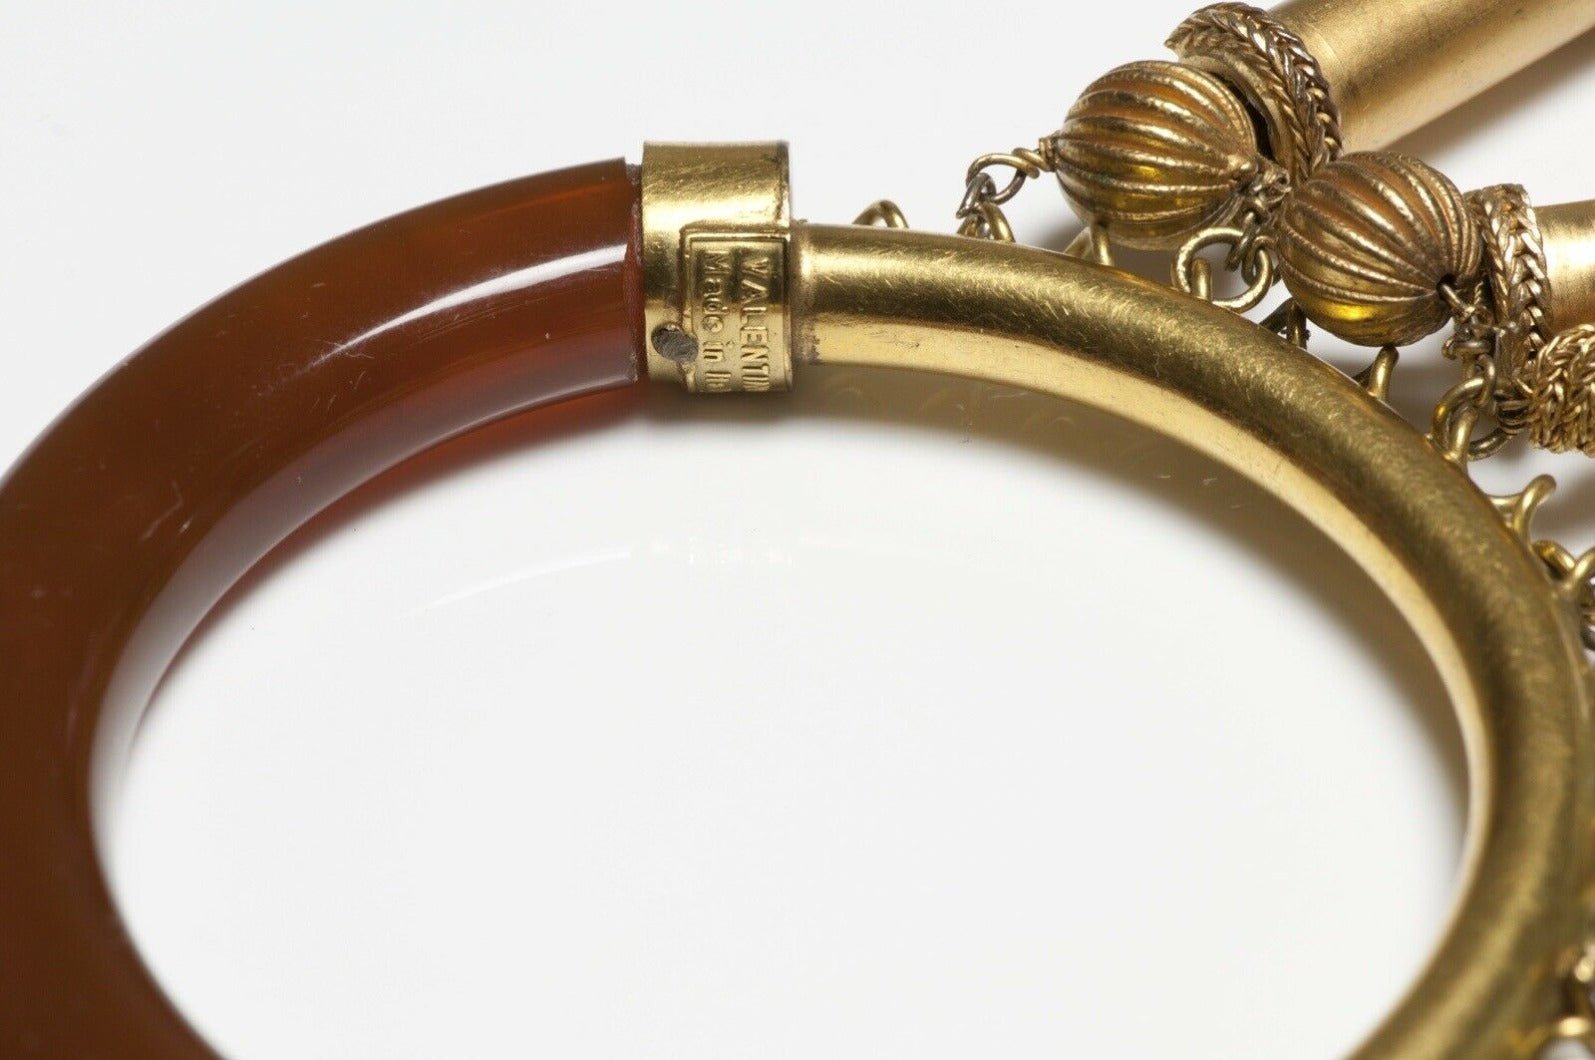 Vintage VALENTINO Garavani Sea Shell Tassel Charm Bracelet